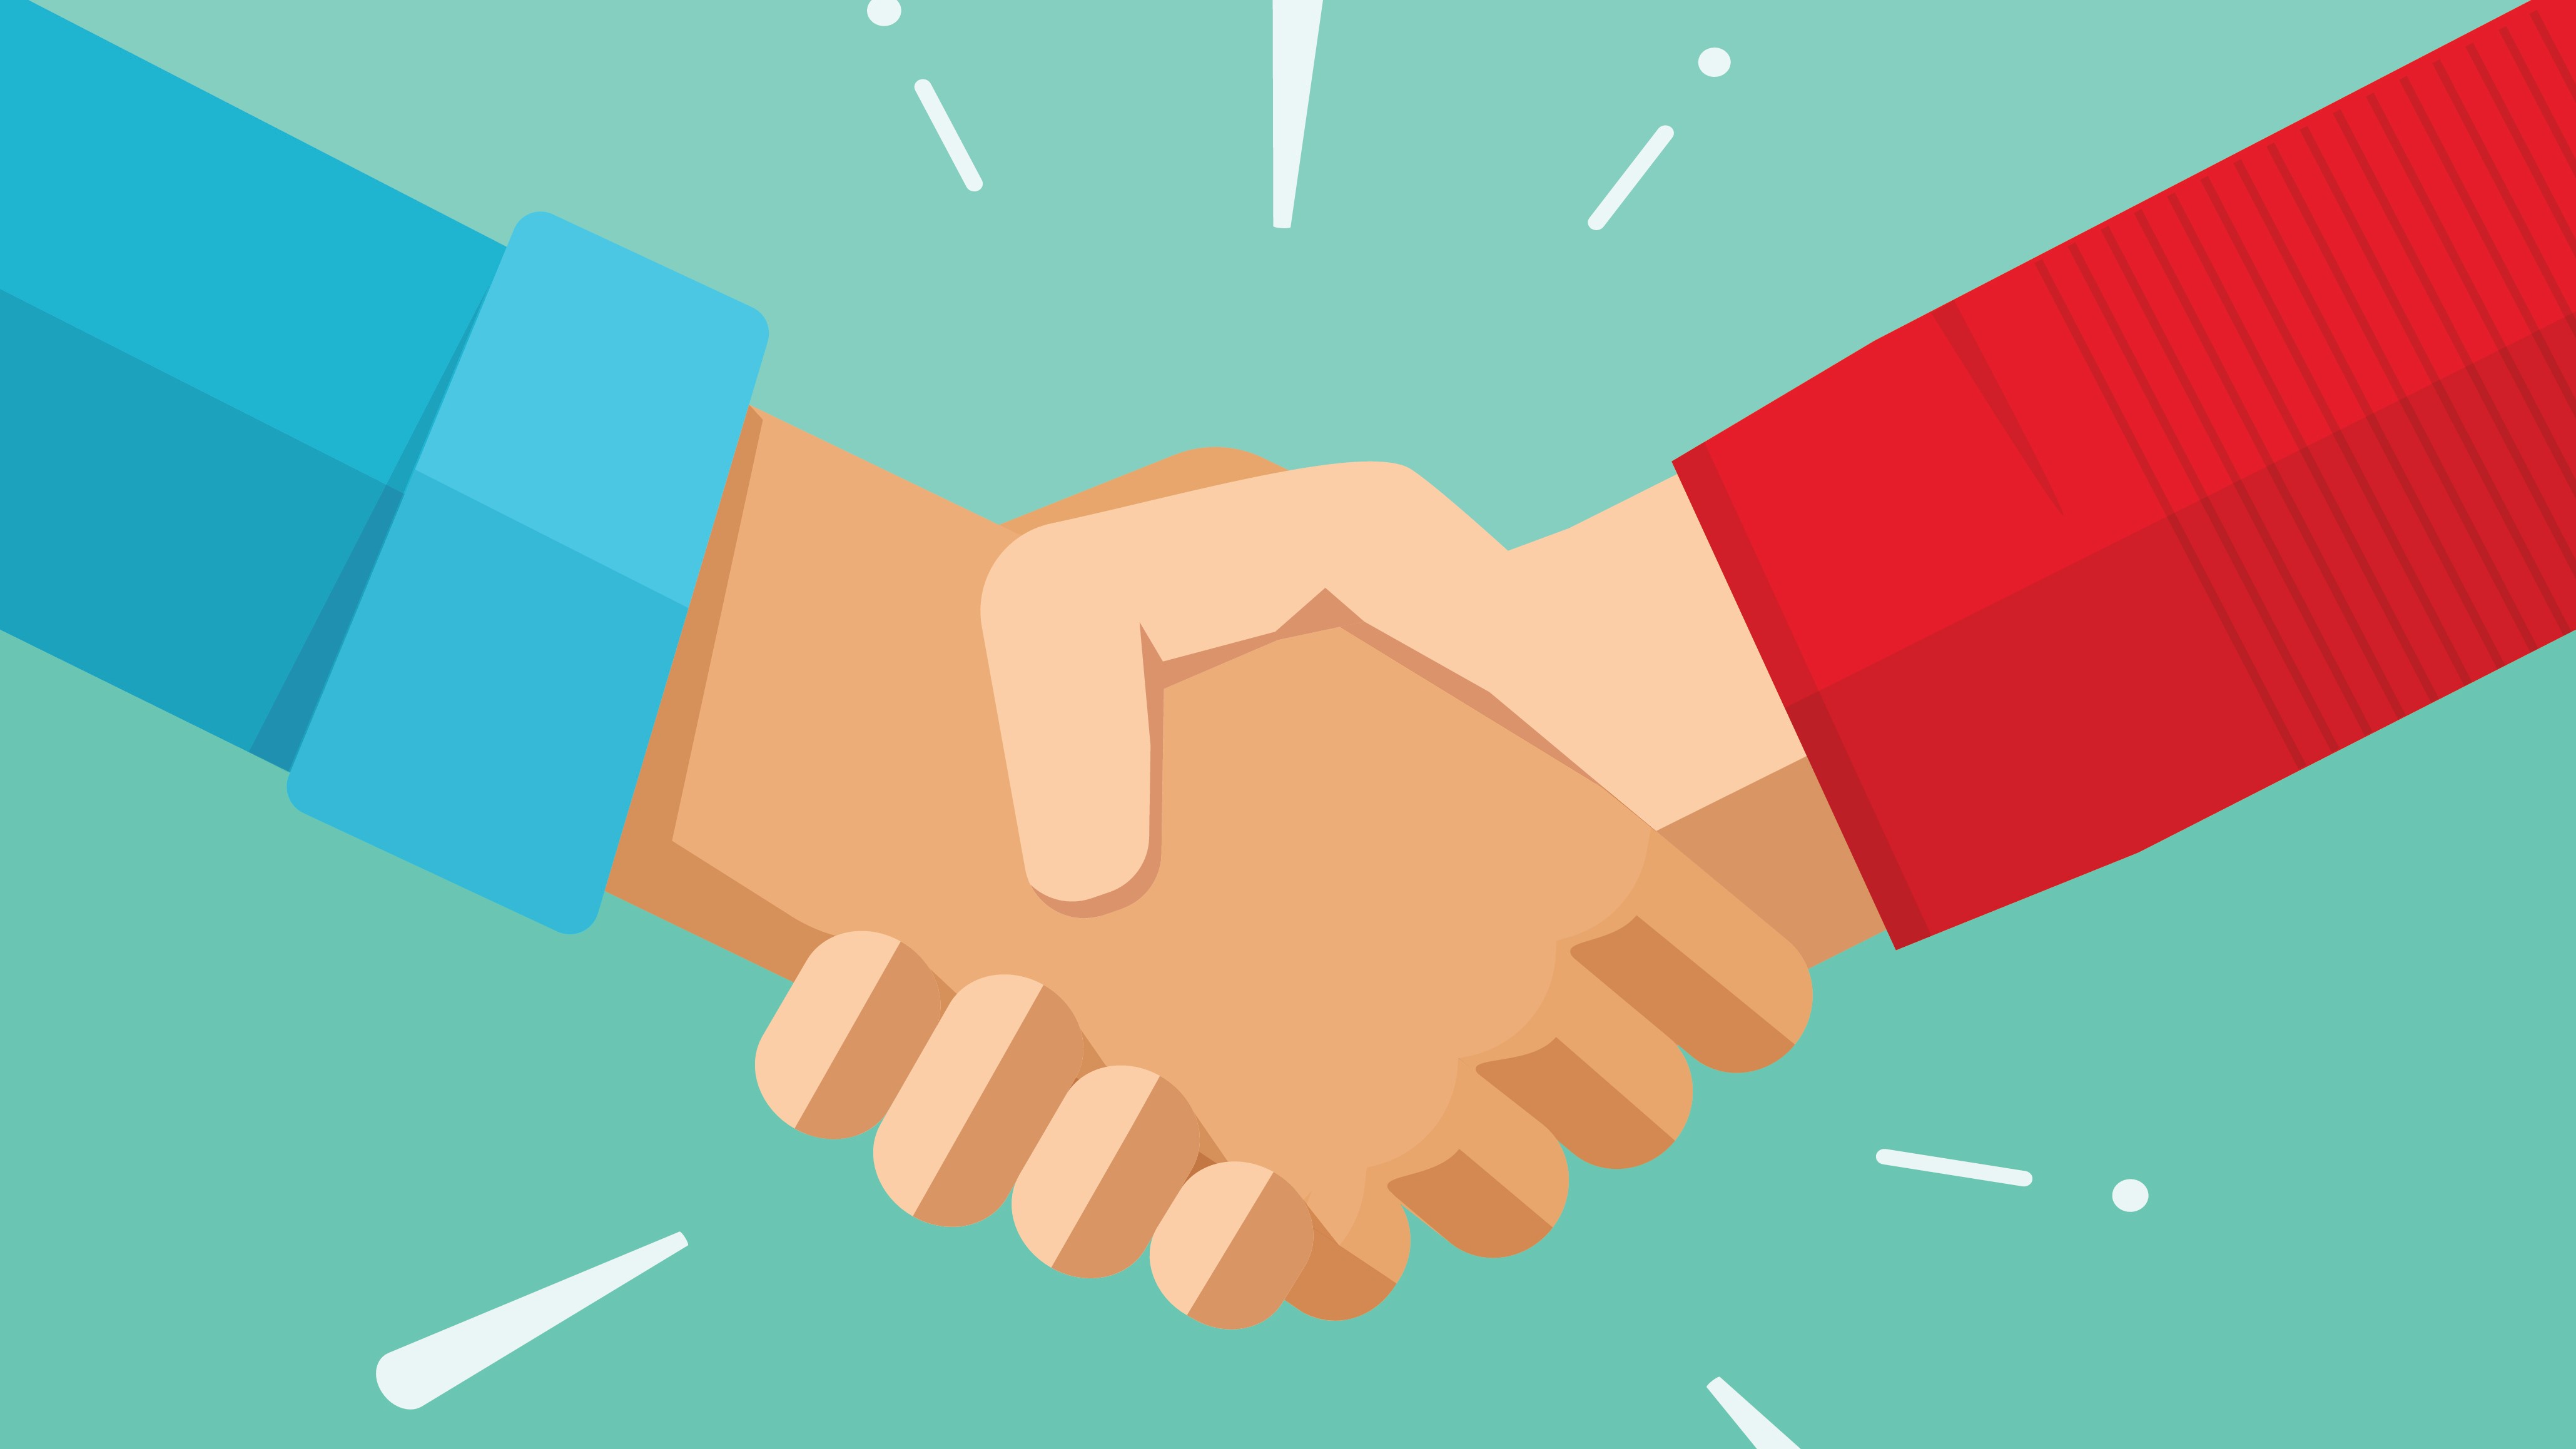 Shaking hands vector illustration, agreement deal handshake, partnership friendship congratulations